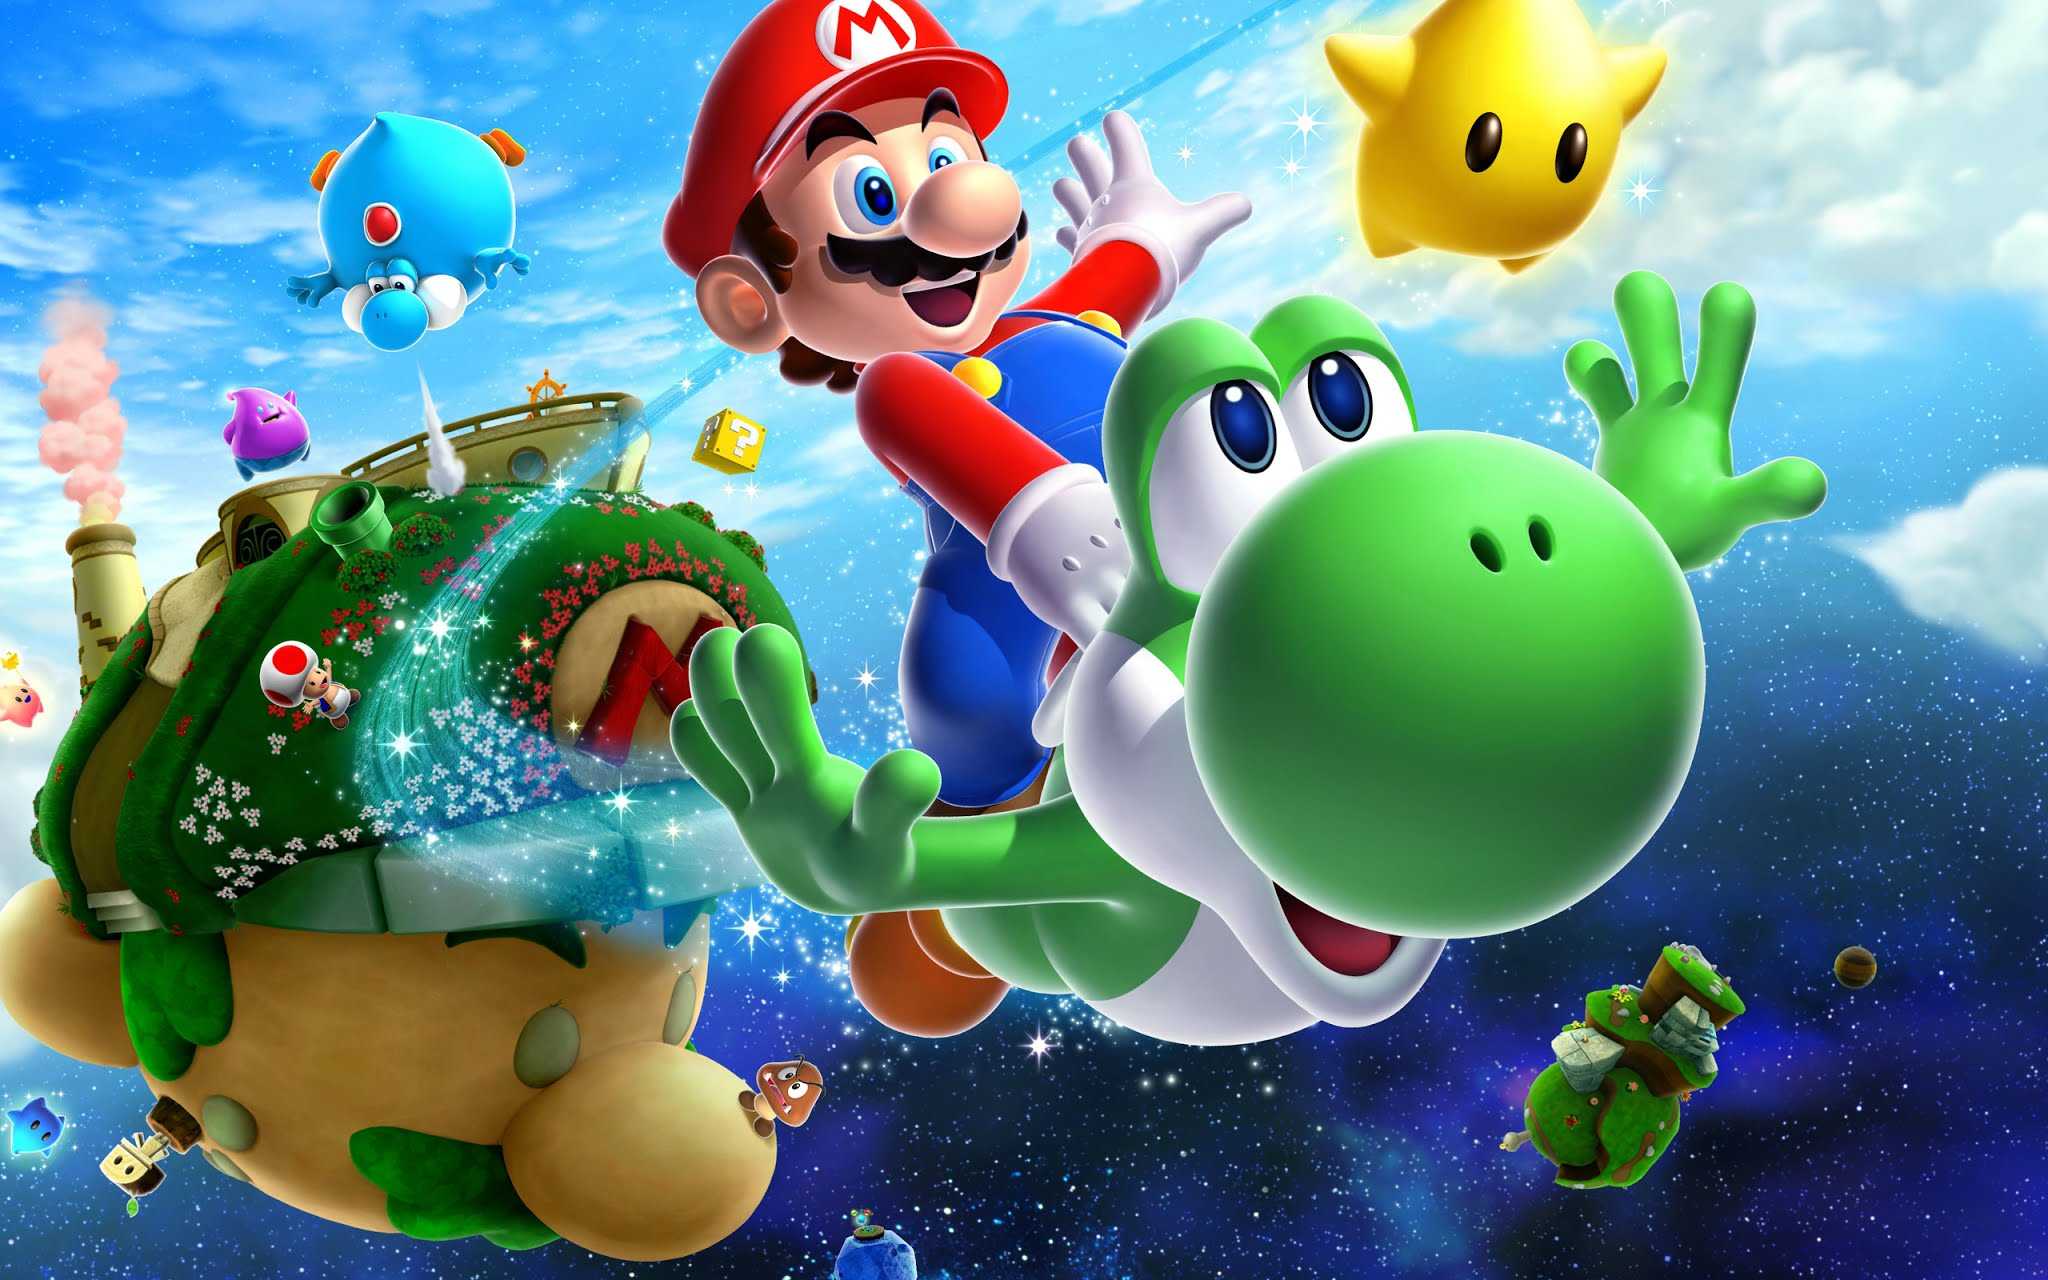 Super mario bros. Super Mario Galaxy 2 Постер. Супер Марио галакси. Подводный мир Марио. Super Mario Galaxy обложка.